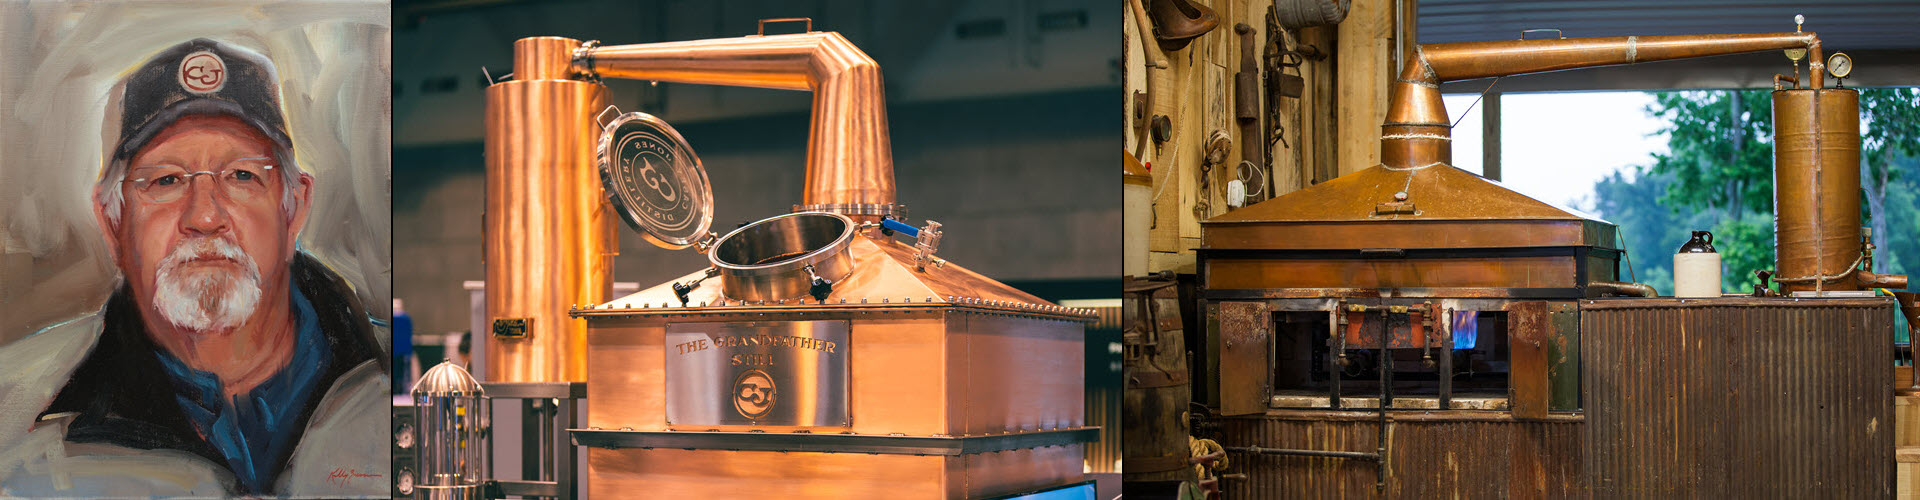 Casey Jones Distillery - Casey Jones Expansion Includes the Addition of a New Square Copper Pot Still, The Grandfather